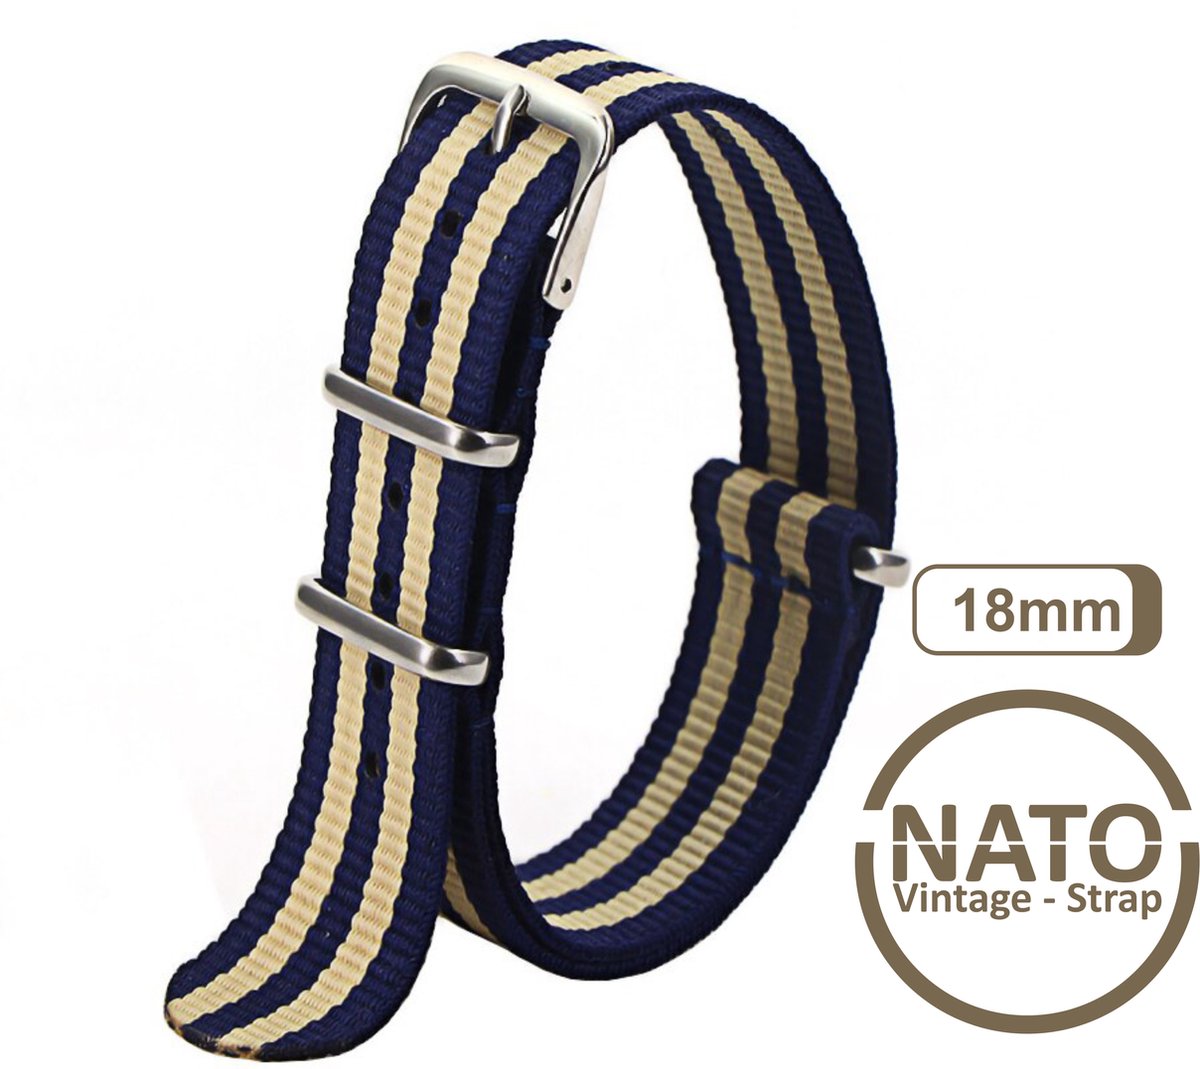 18mm Nato Strap Blauw Khaki - Goud streep - Vintage James Bond - Nato Strap collectie - Mannen - Horlogebanden - gestreept 18 mm bandbreedte voor oa. Seiko Rolex Omega Casio en Citizen